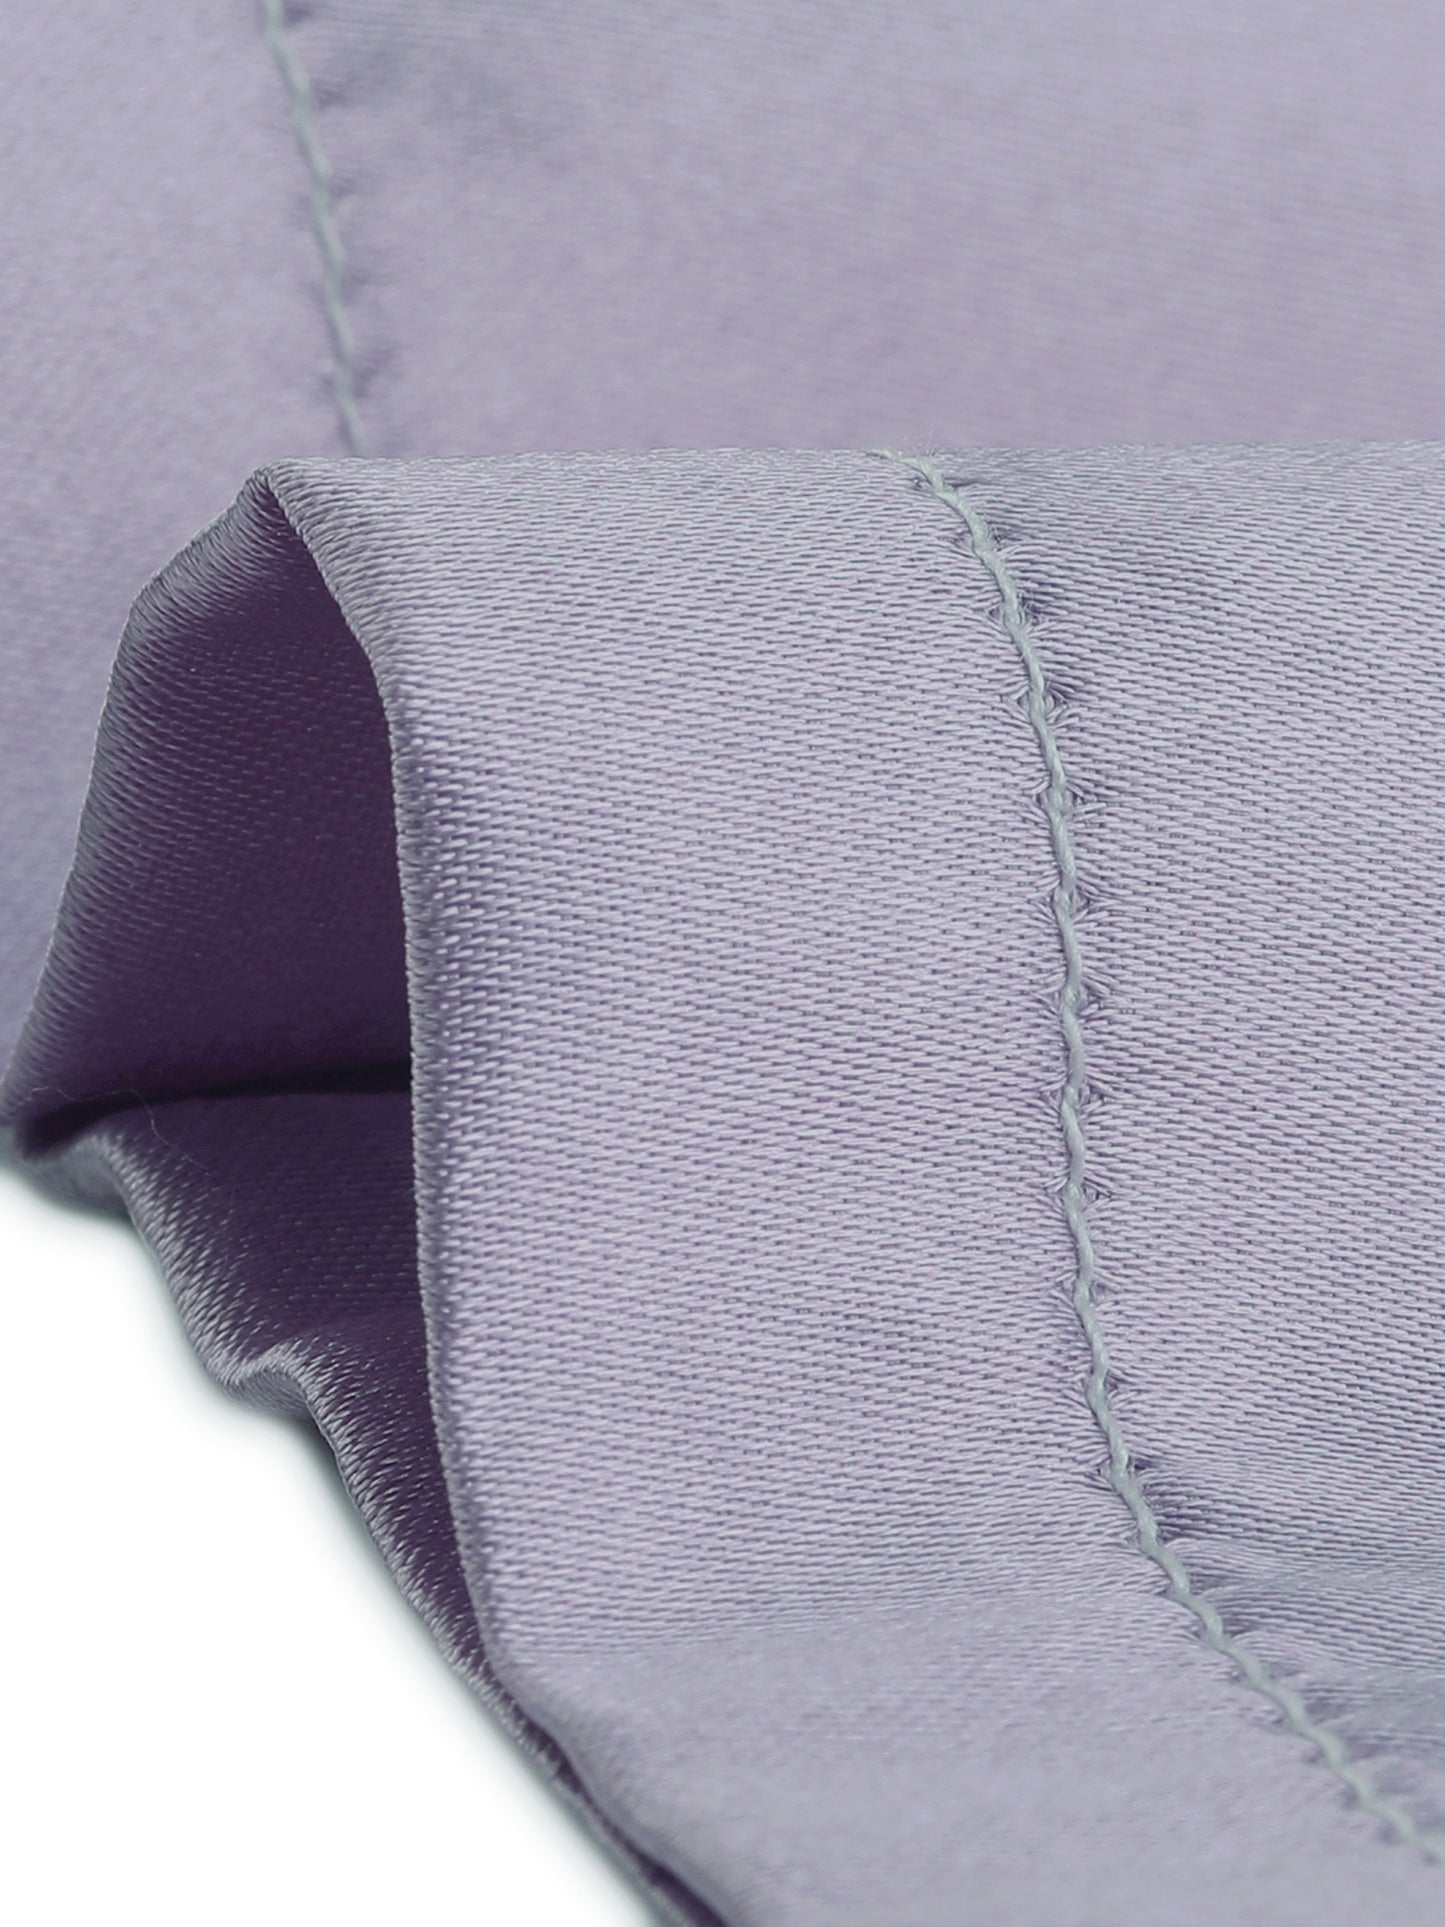 cheibear Pajama Loungewear Short Sleeves Button Down Satin Pj Sets Gray Purple